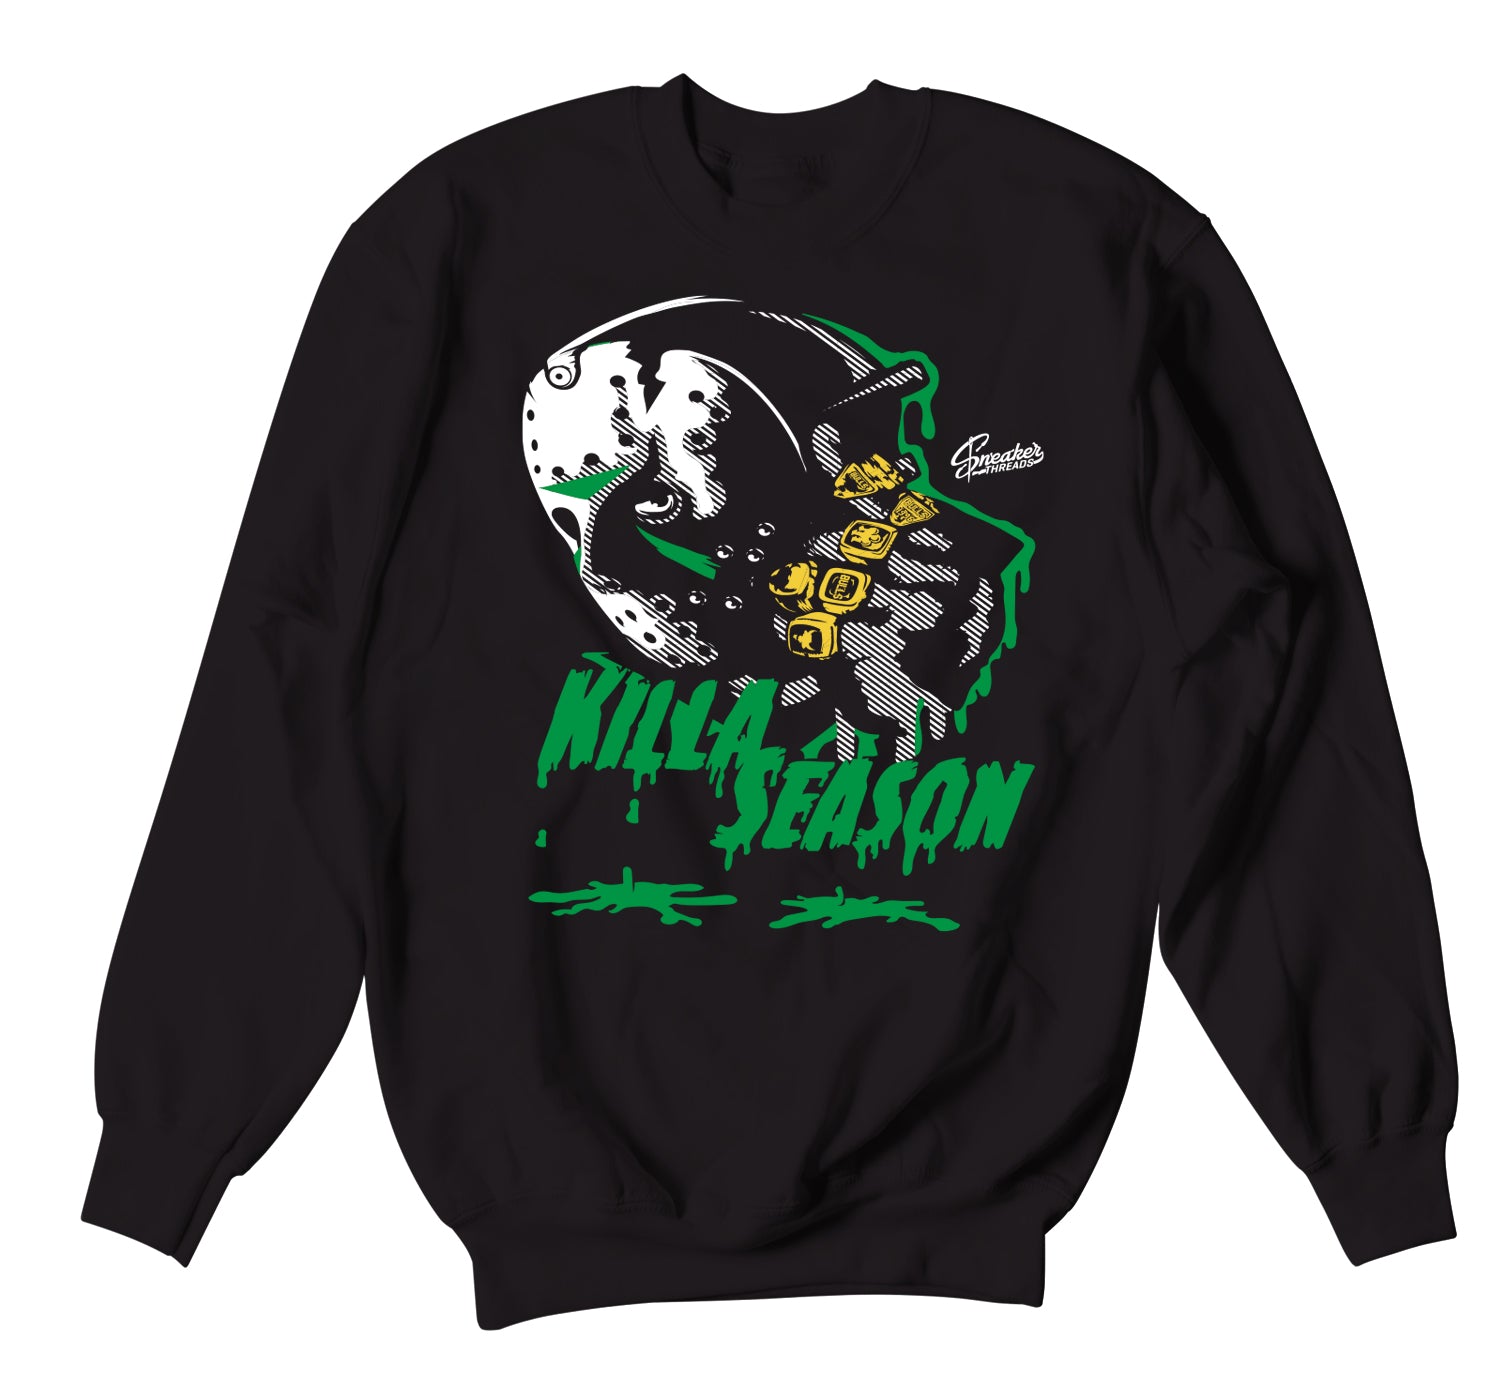 Killa Season Sweater - Retro 3 Pine Green